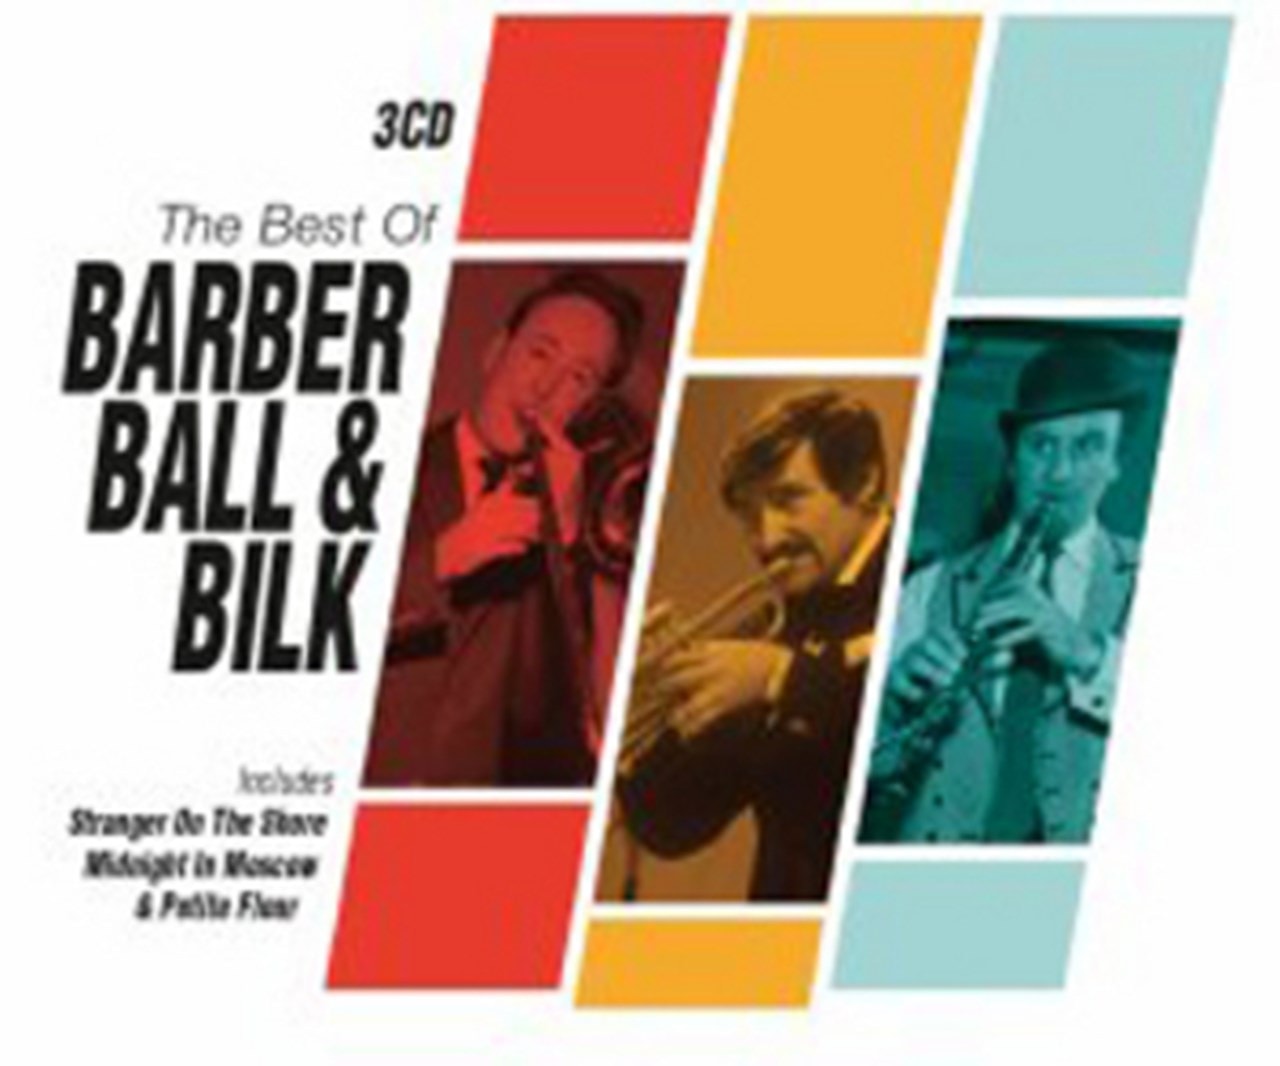 The Best of Barber, Ball & Bilk CD Album Free shipping over £20